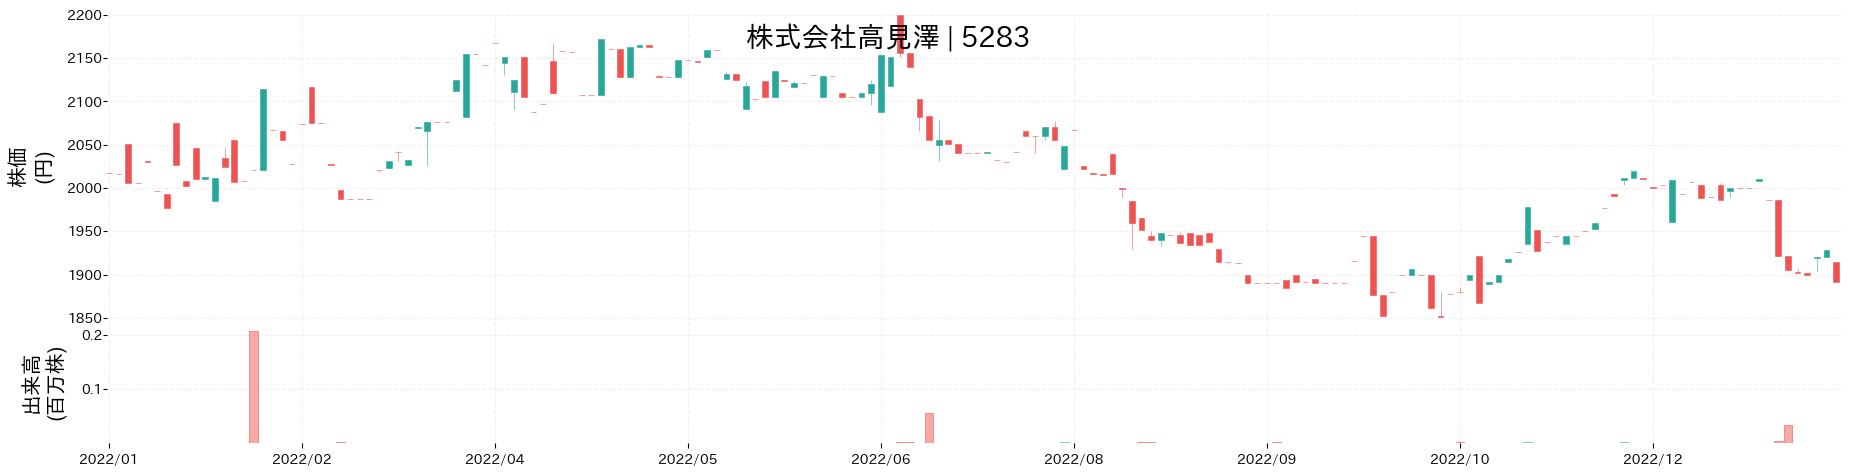 高見澤の株価推移(2022)